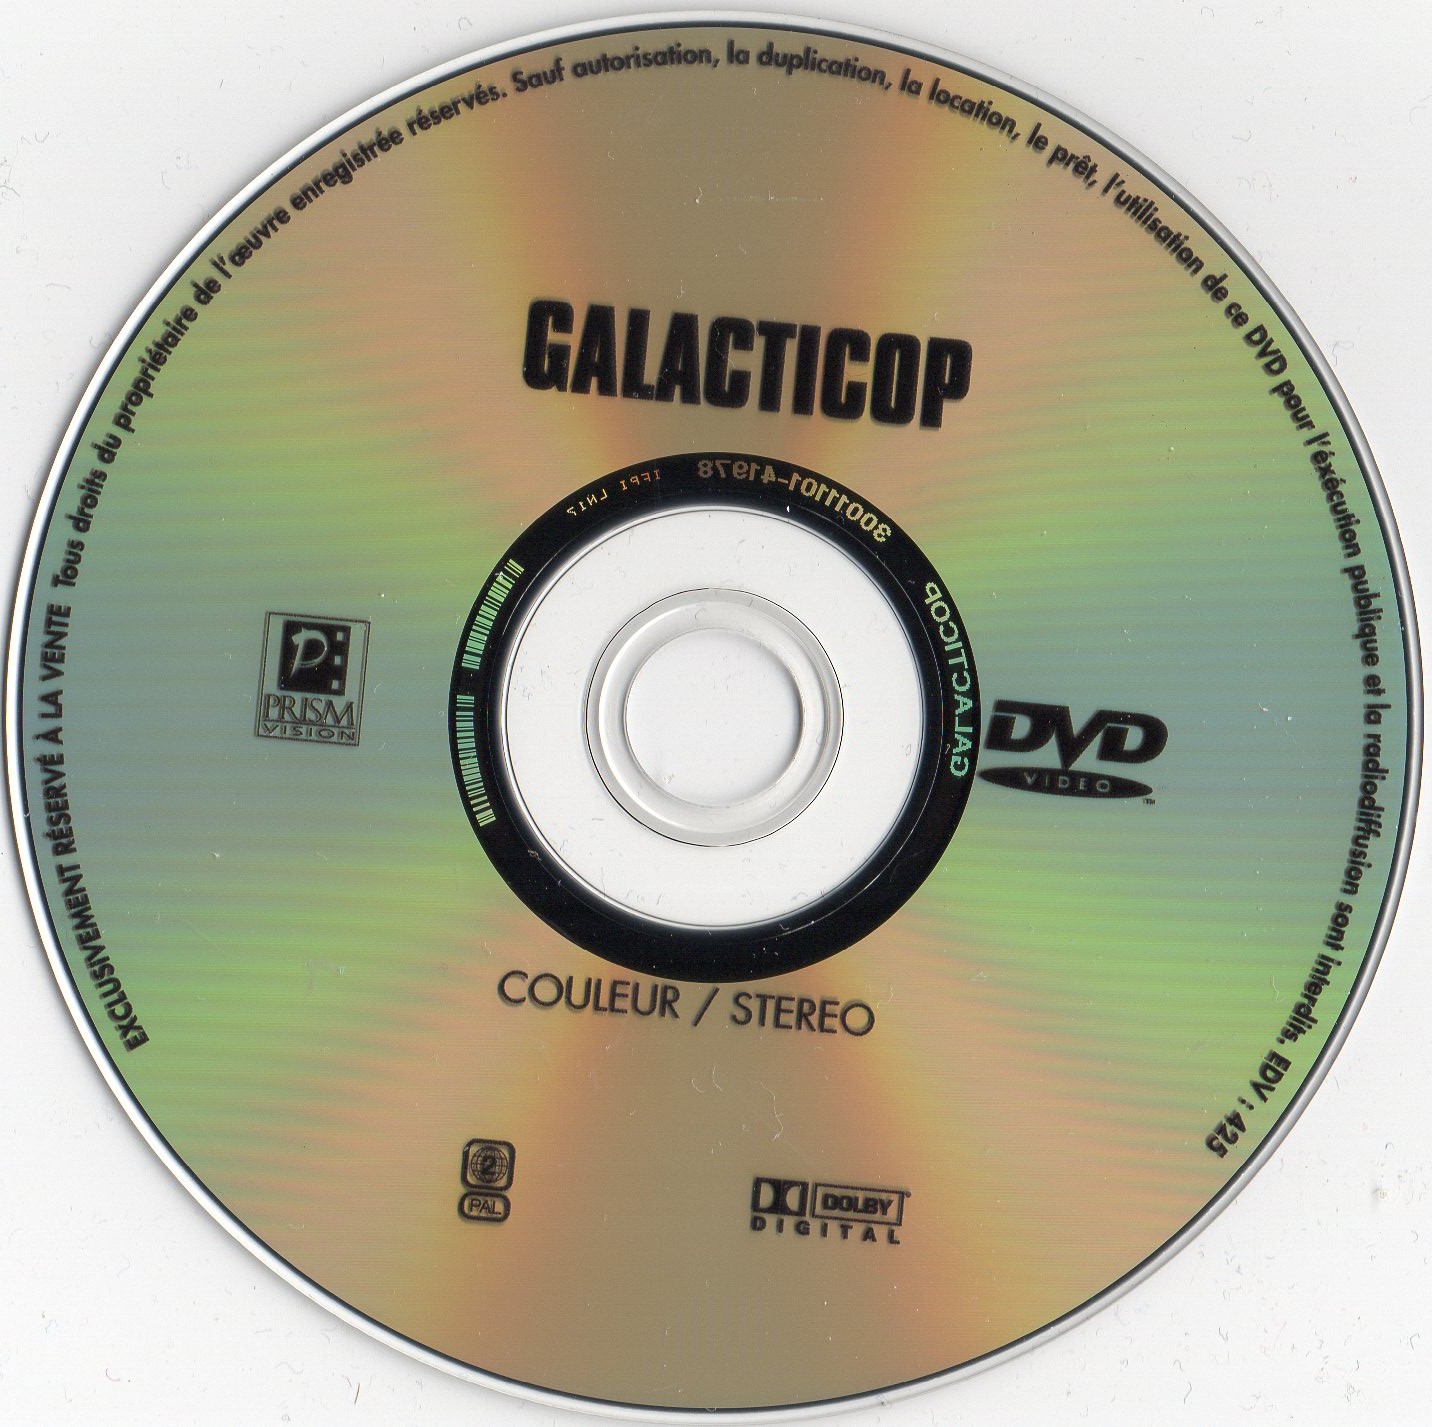 Galacticop